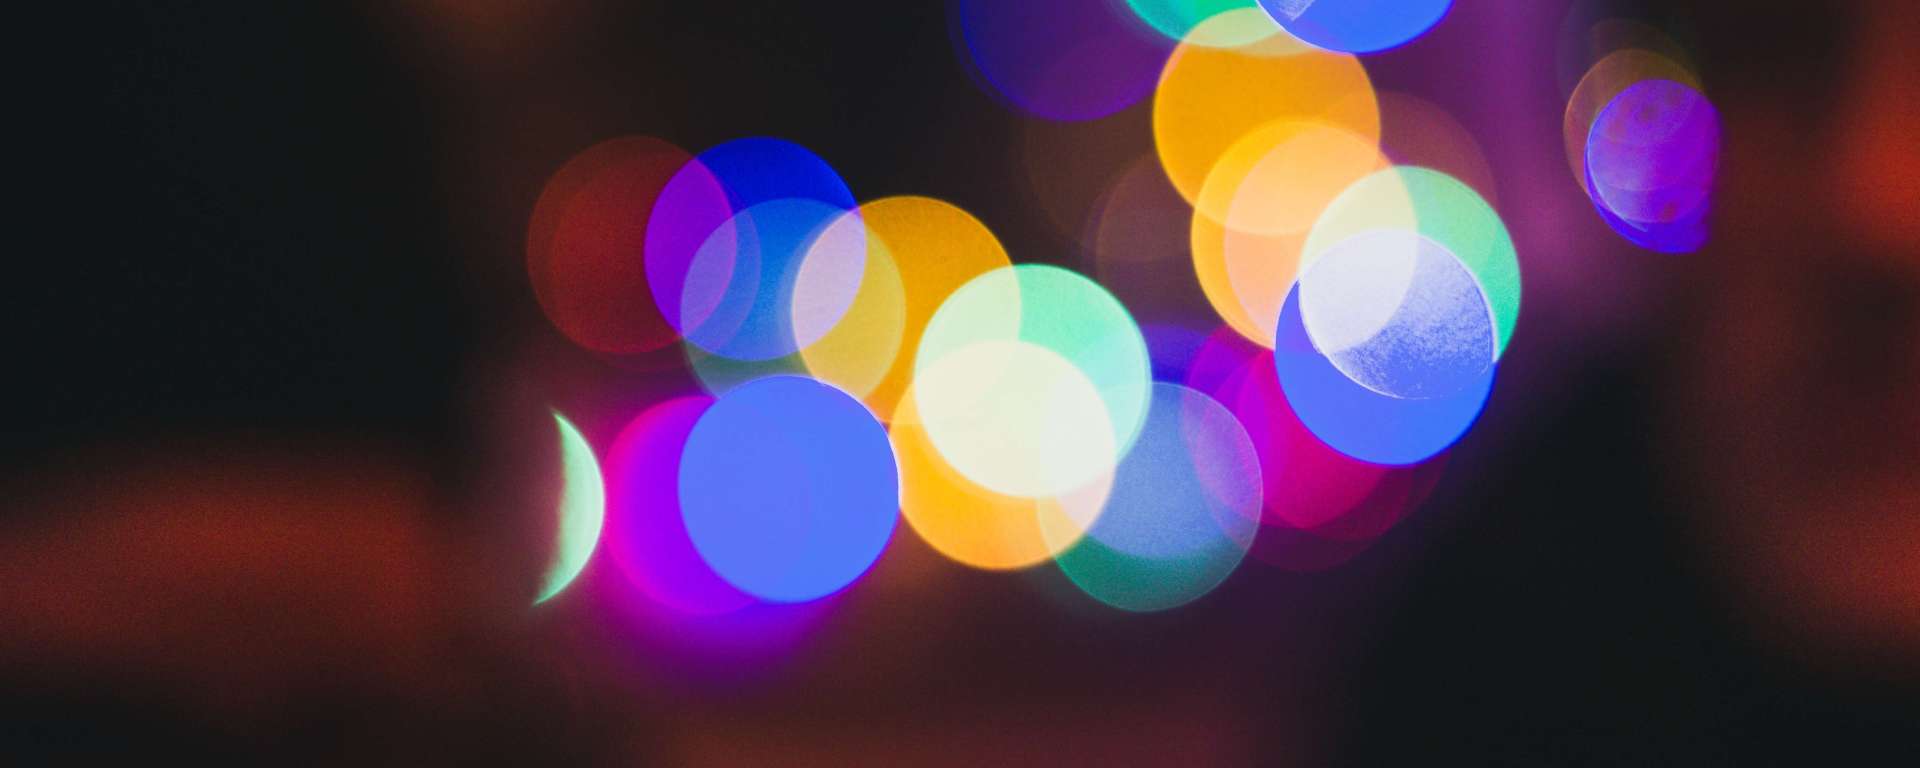 Colorful circular lights